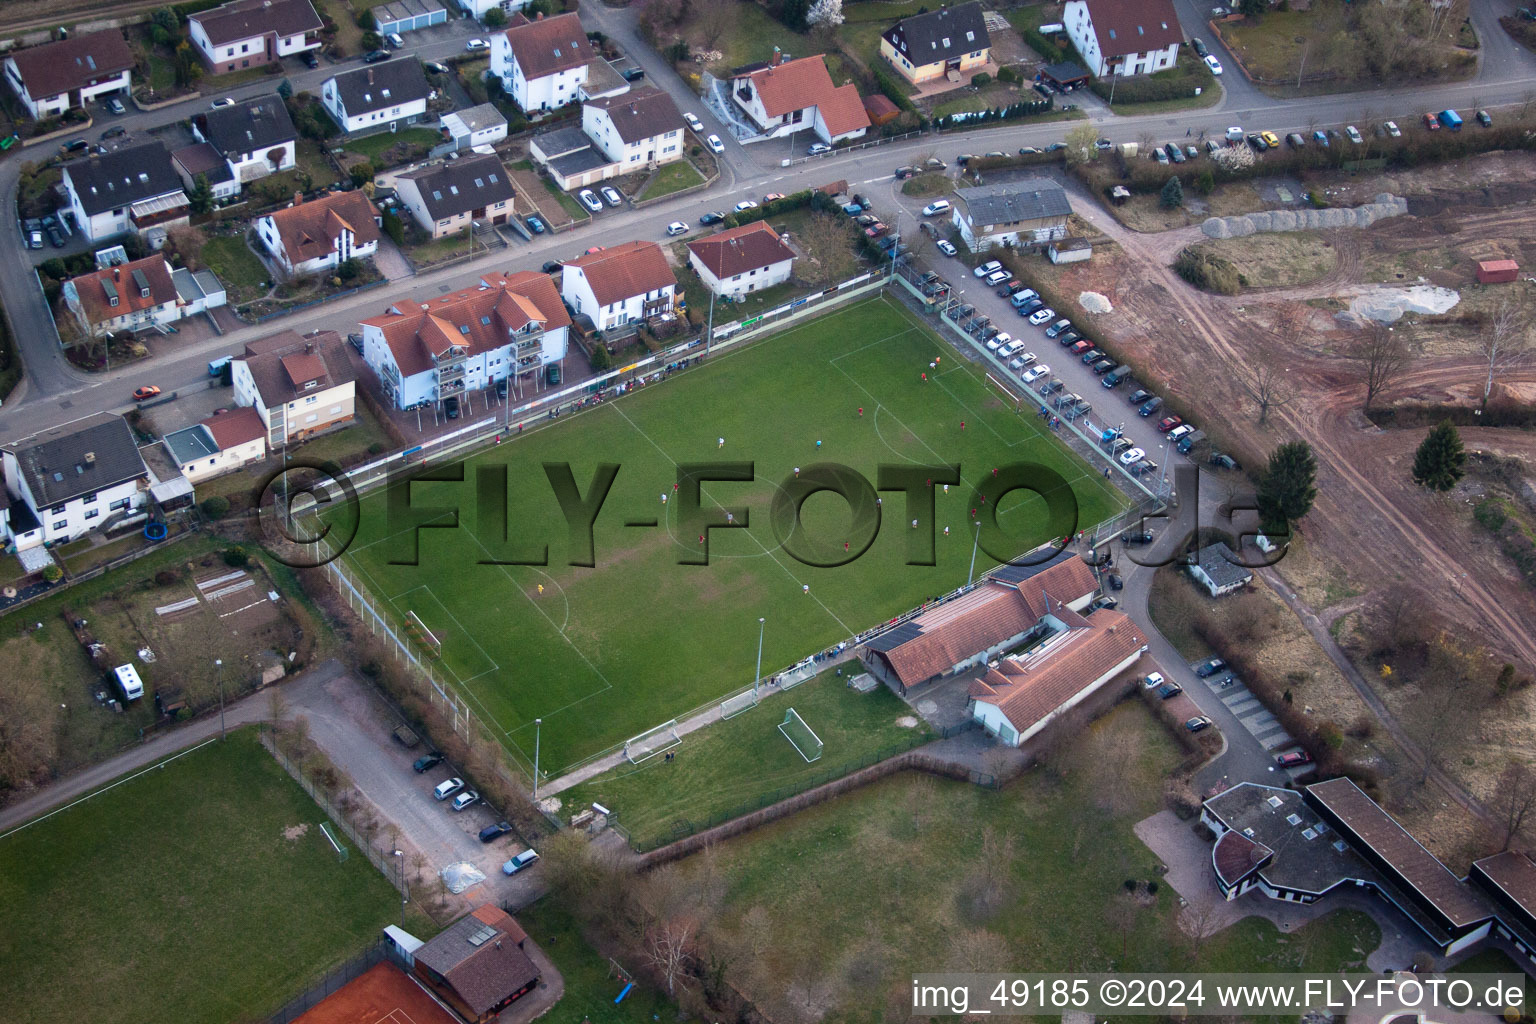 Sports fields in the district Ingenheim in Billigheim-Ingenheim in the state Rhineland-Palatinate, Germany from the plane